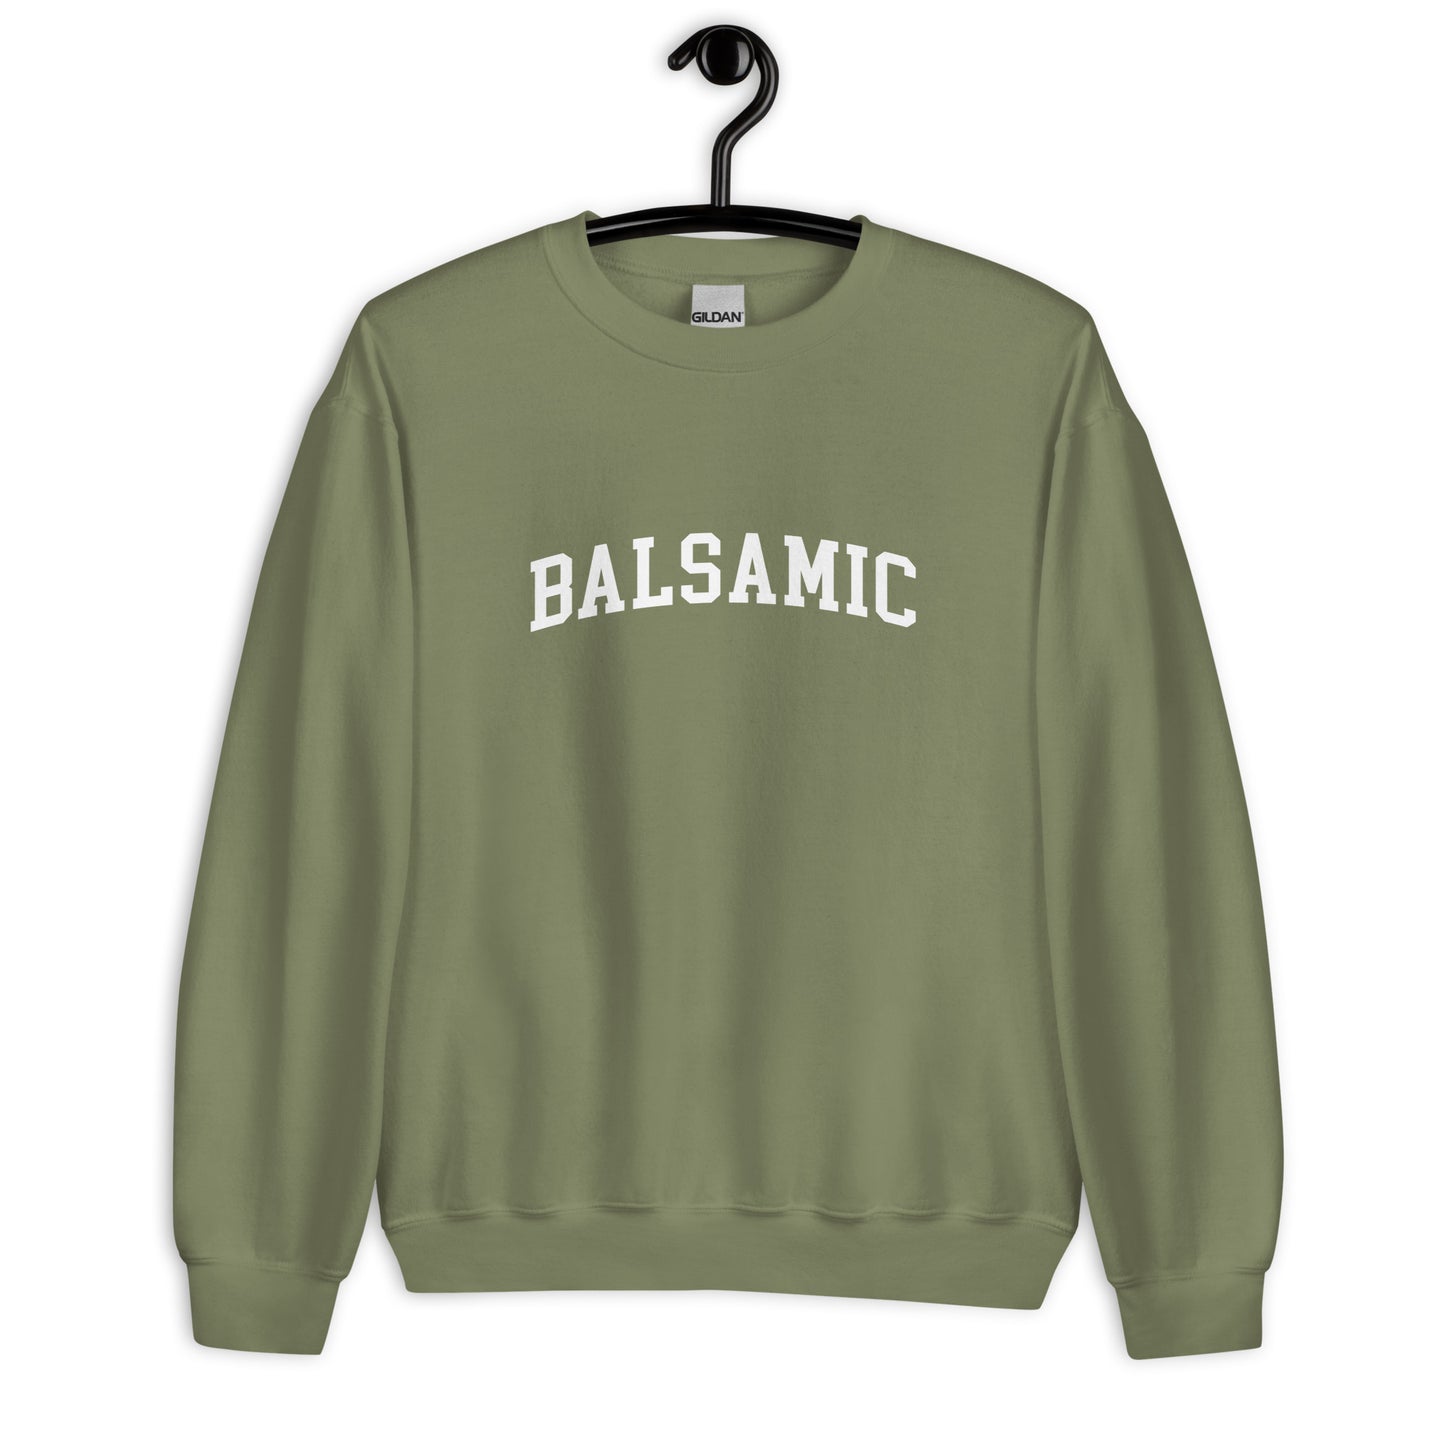 Balsamic Sweatshirt - Arched Font